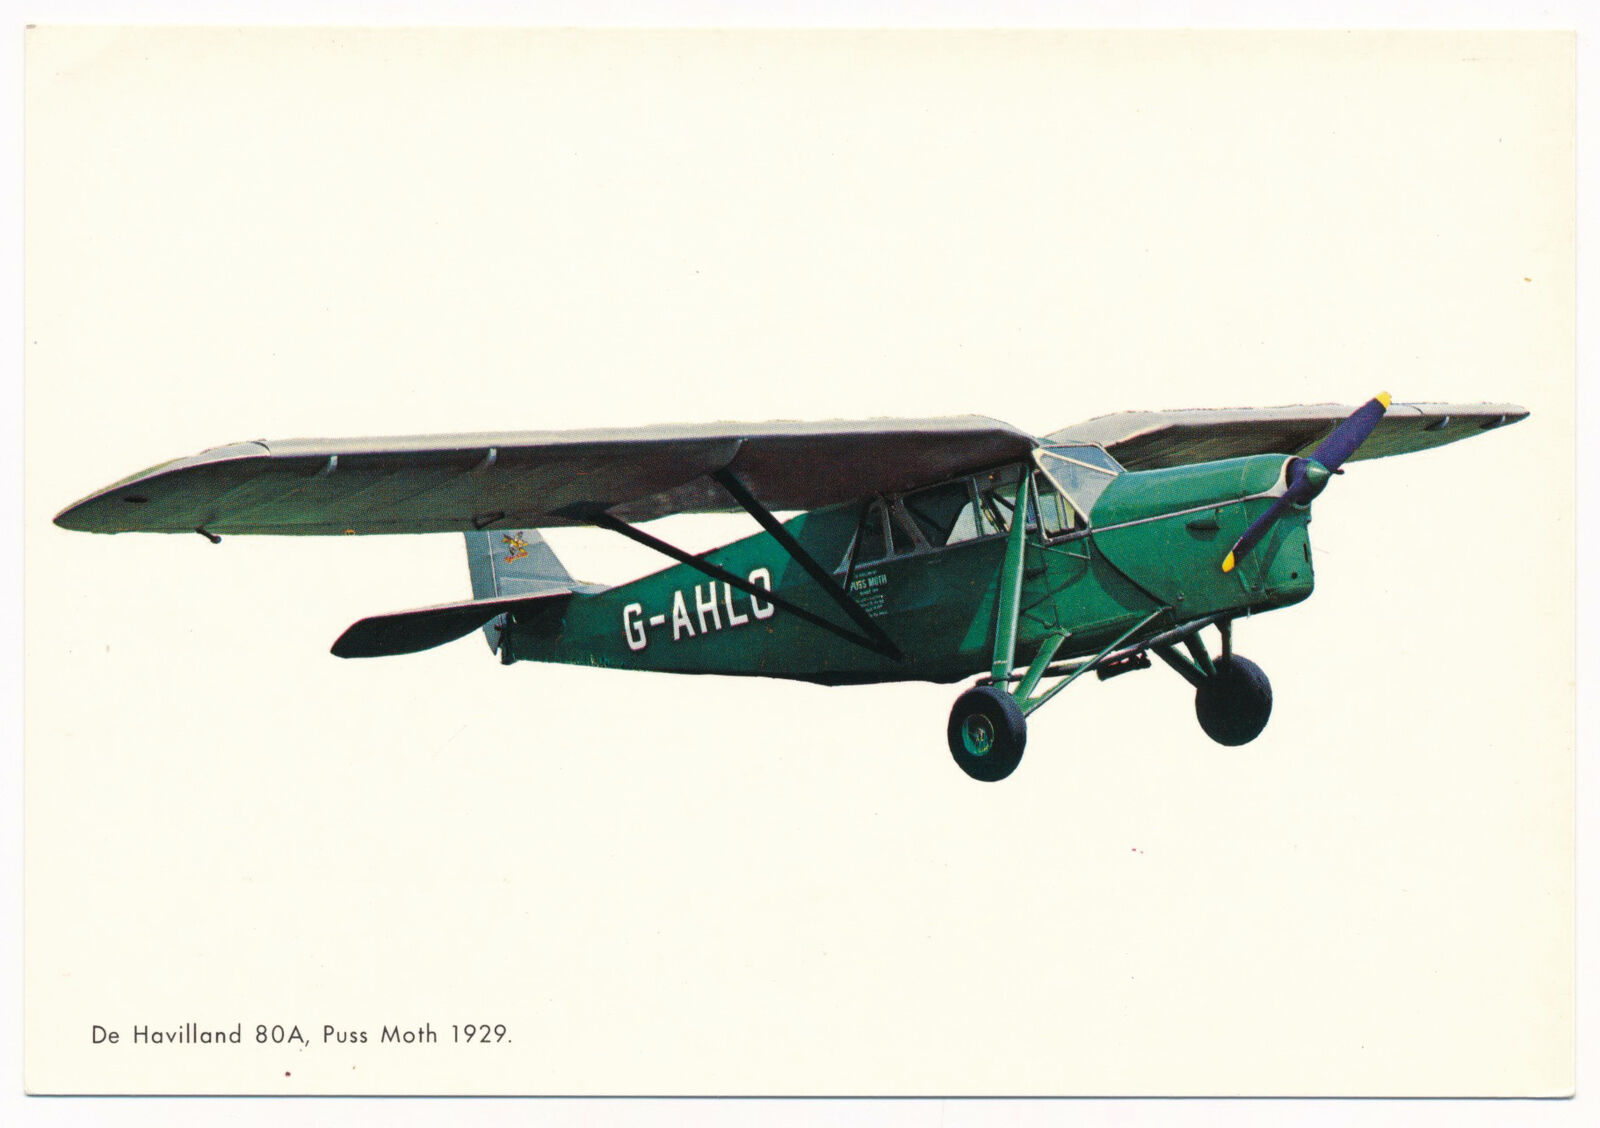 De Havilland 80A, Puss Moth Monoplane